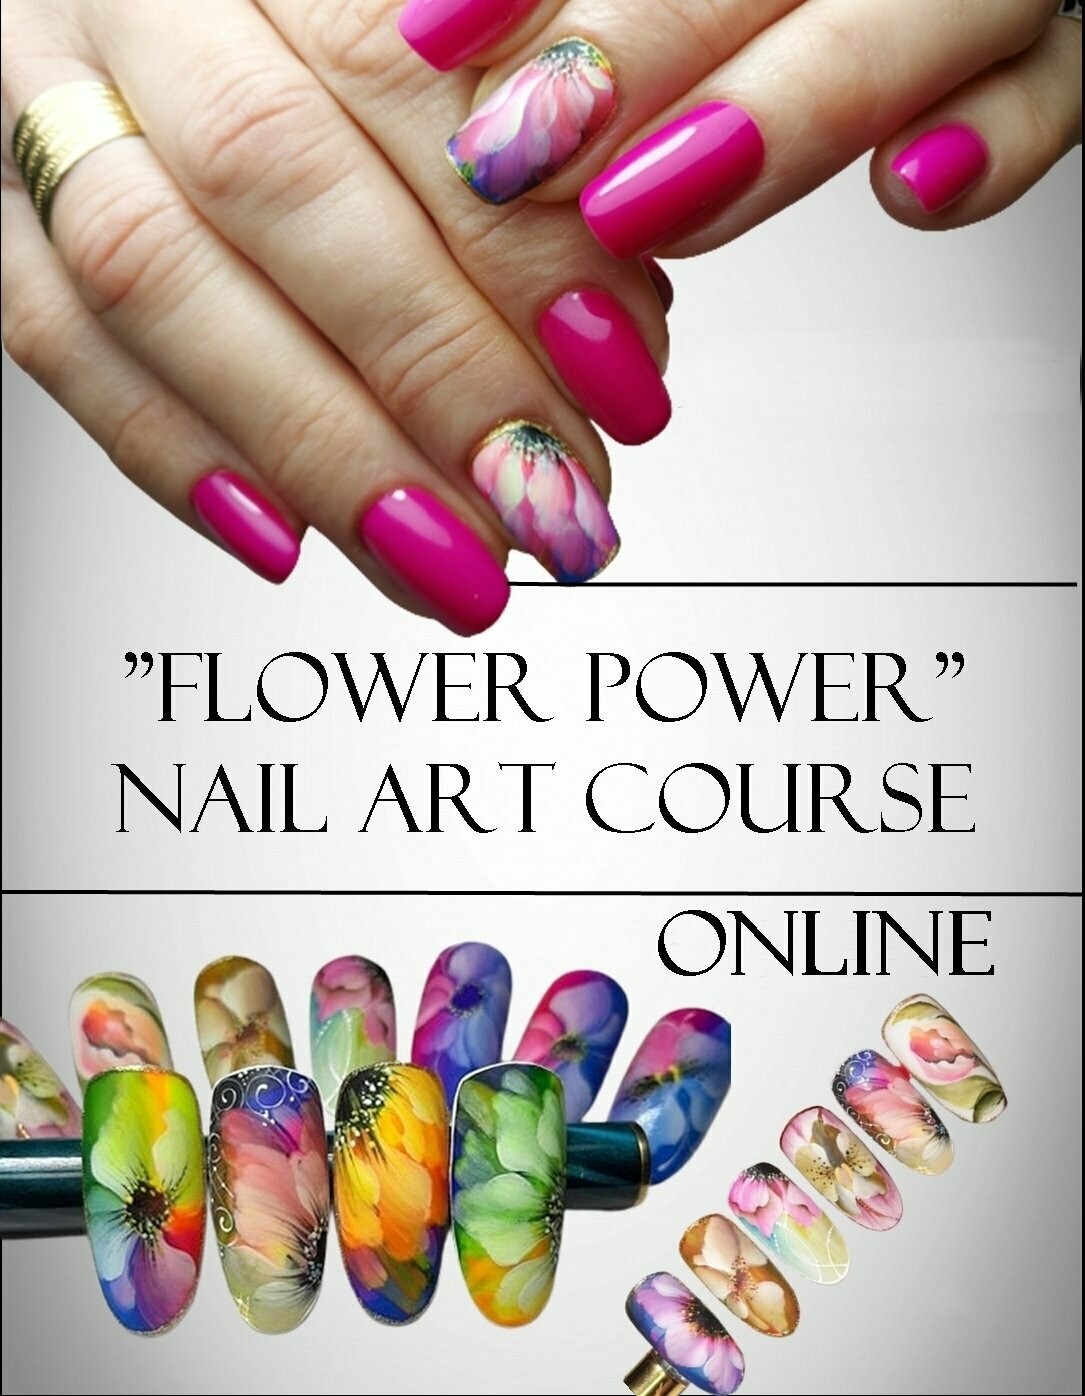 Online Nail Art & Hand's Care Course Voucher - Nottingham - Wowcher